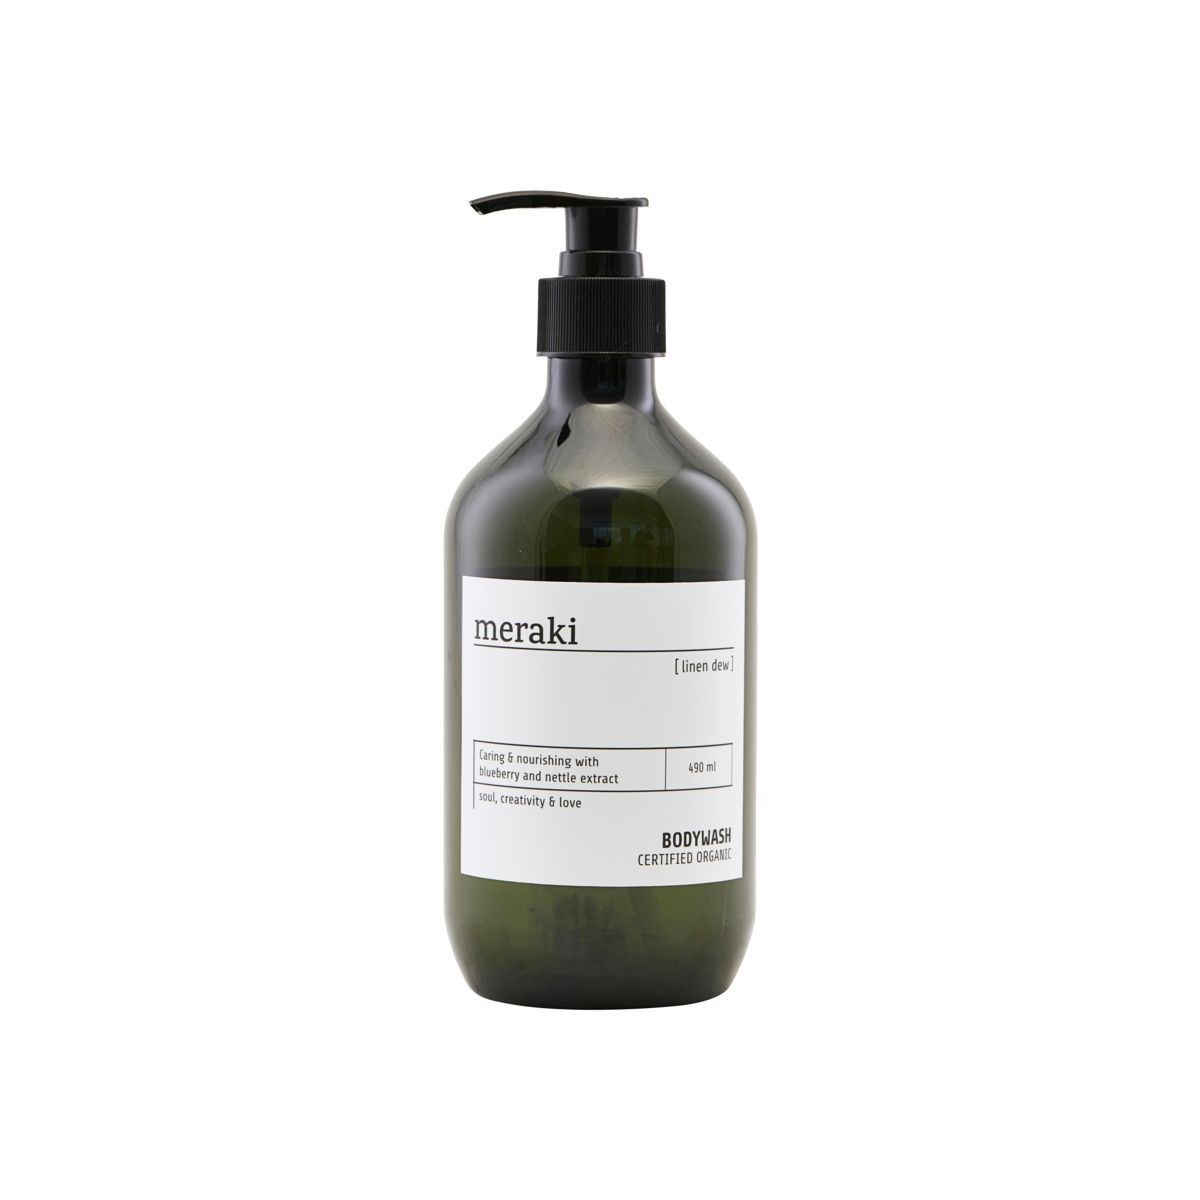 Sprchový gel LINEN DEW 490 ml_1